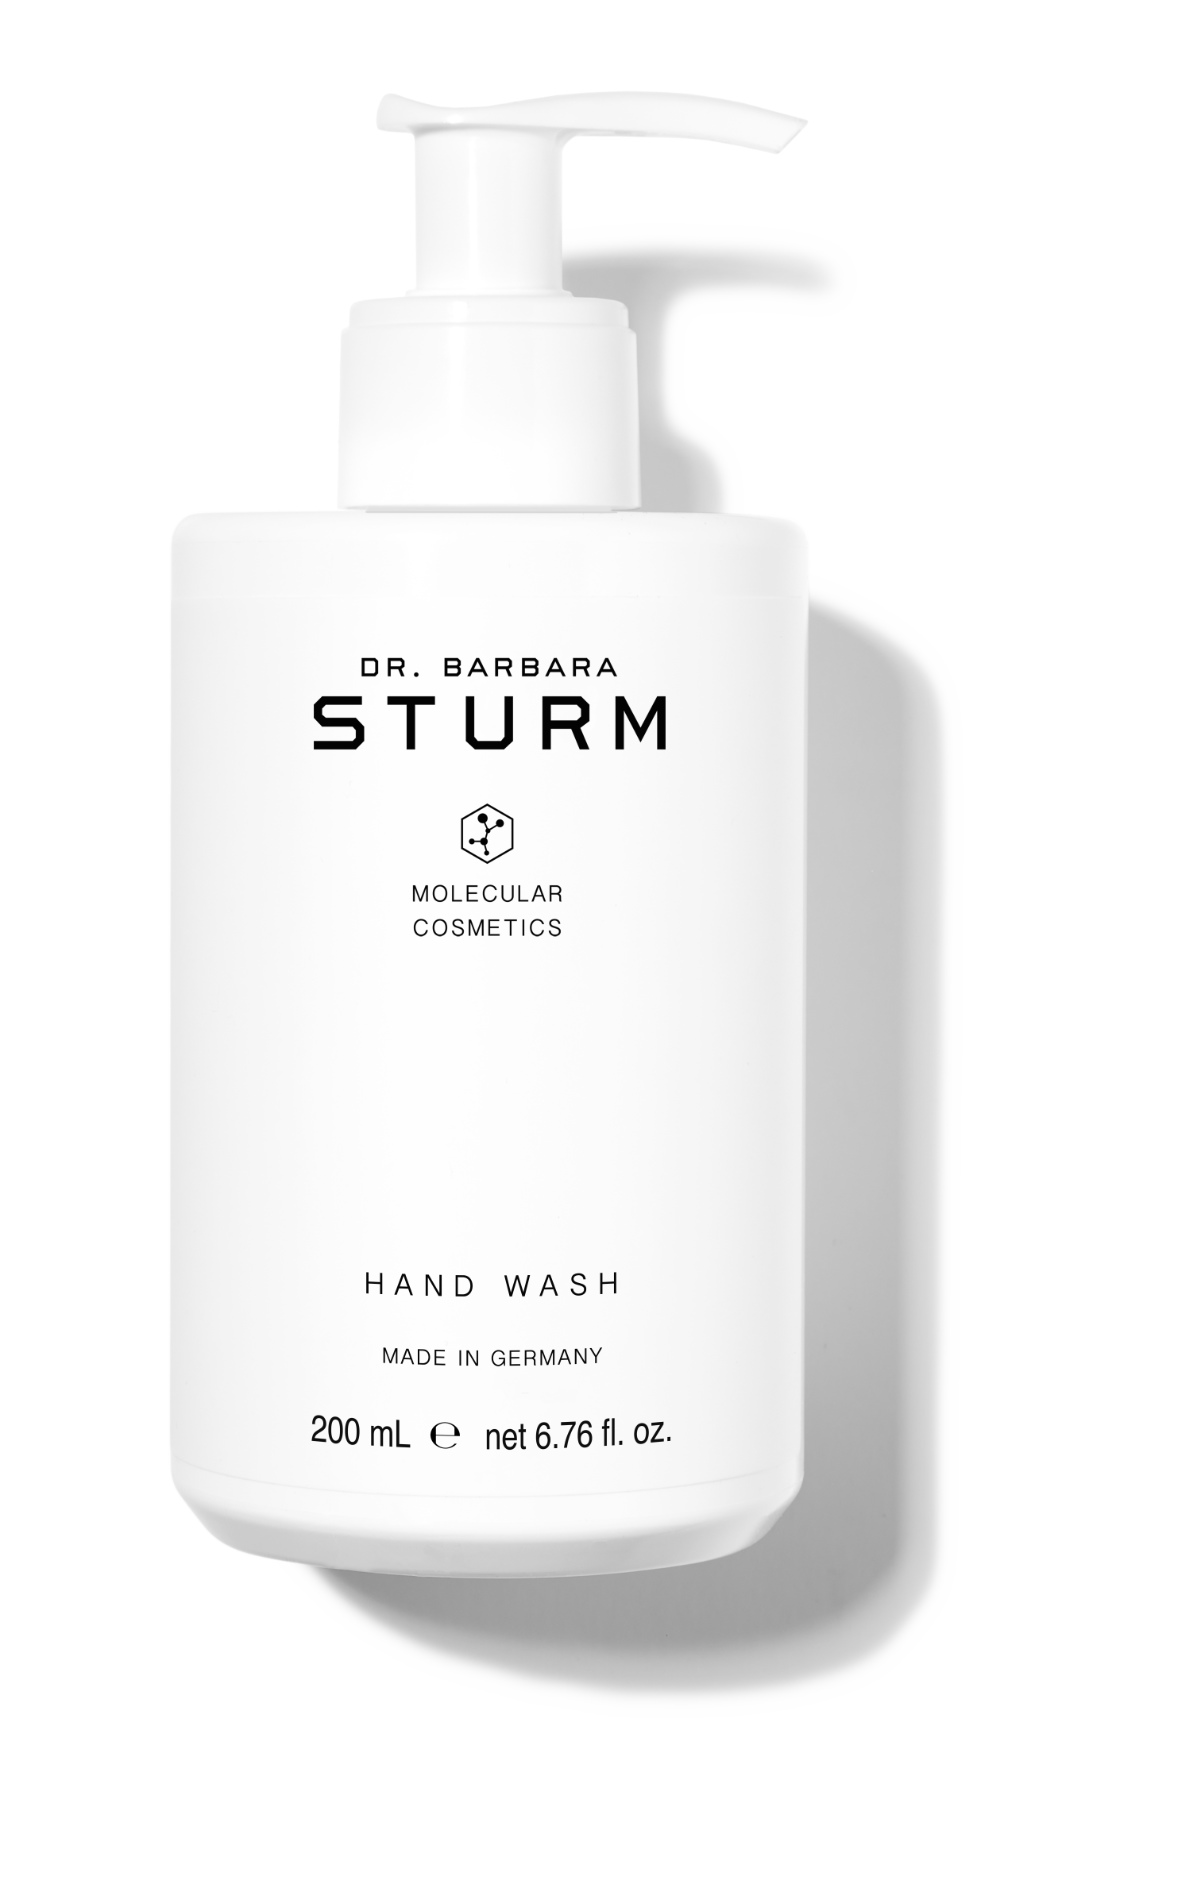 Introducing Dr. Barbara Sturm’s Hand Wash